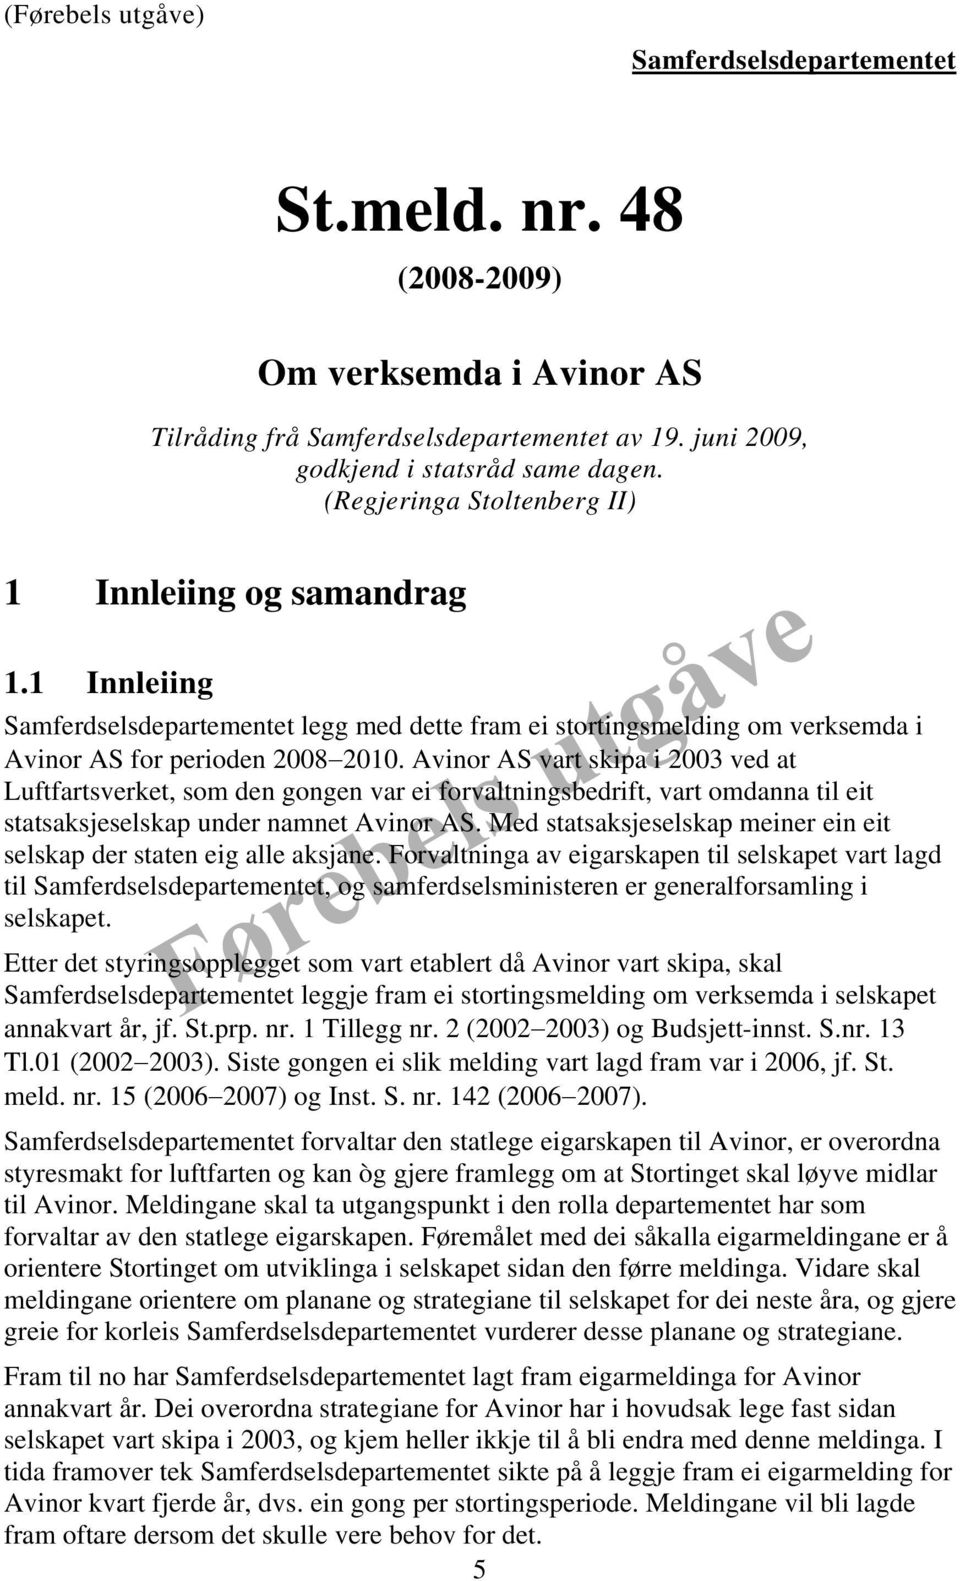 Avinor AS vart skipa i 2003 ved at Luftfartsverket, som den gongen var ei forvaltningsbedrift, vart omdanna til eit statsaksjeselskap under namnet Avinor AS.